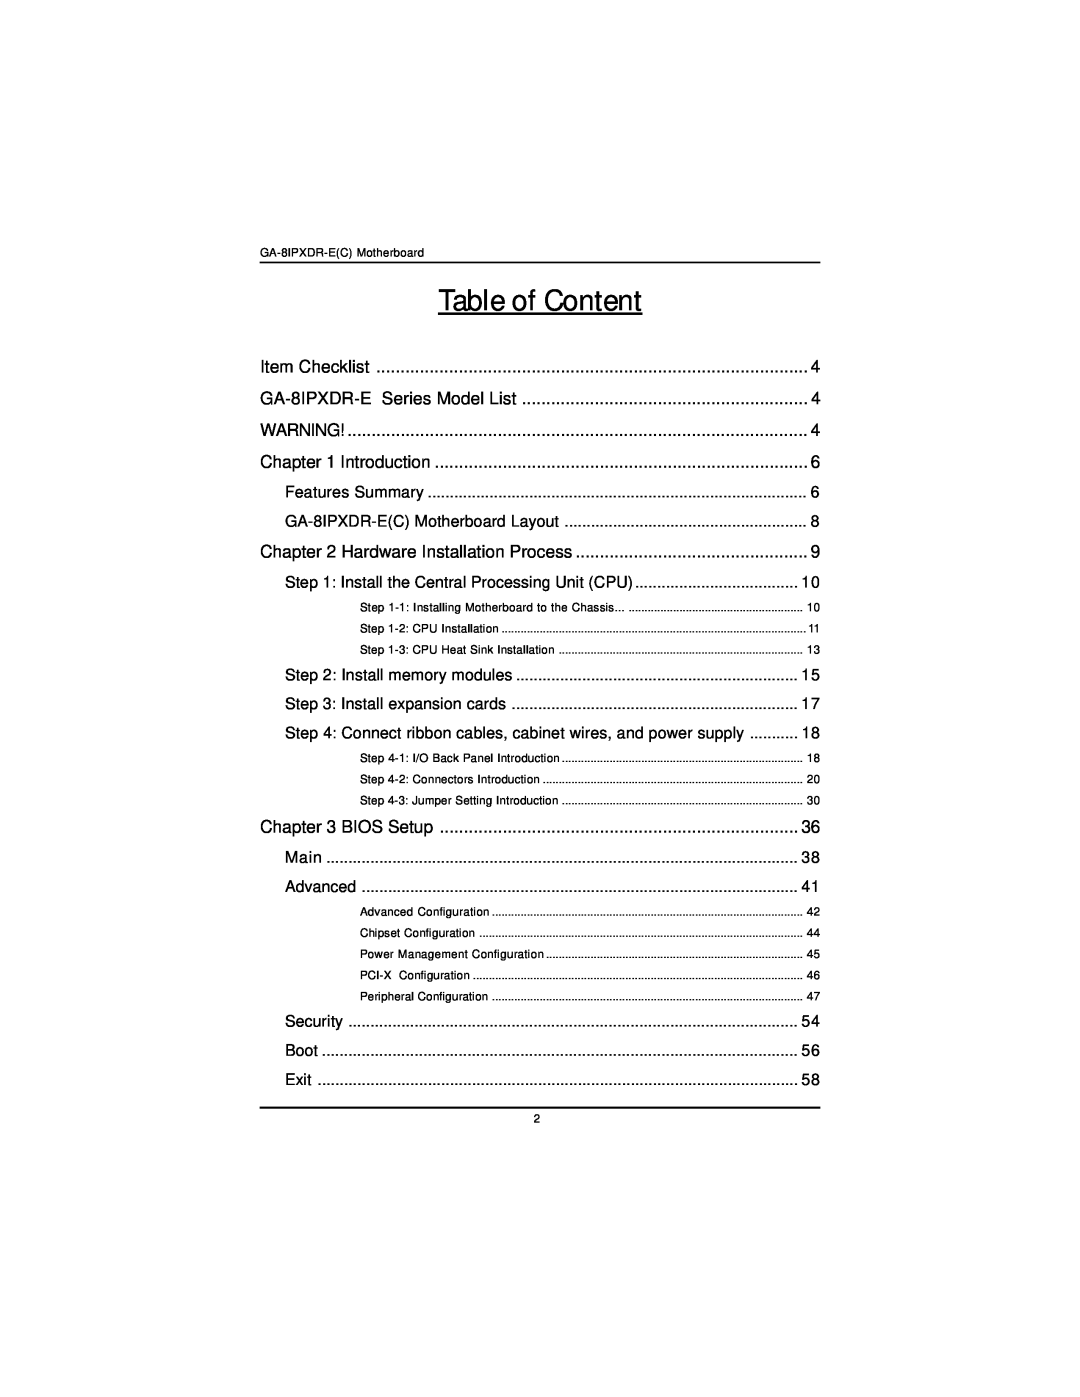 Intel GA-8IPXDR-E user manual Table of Content 